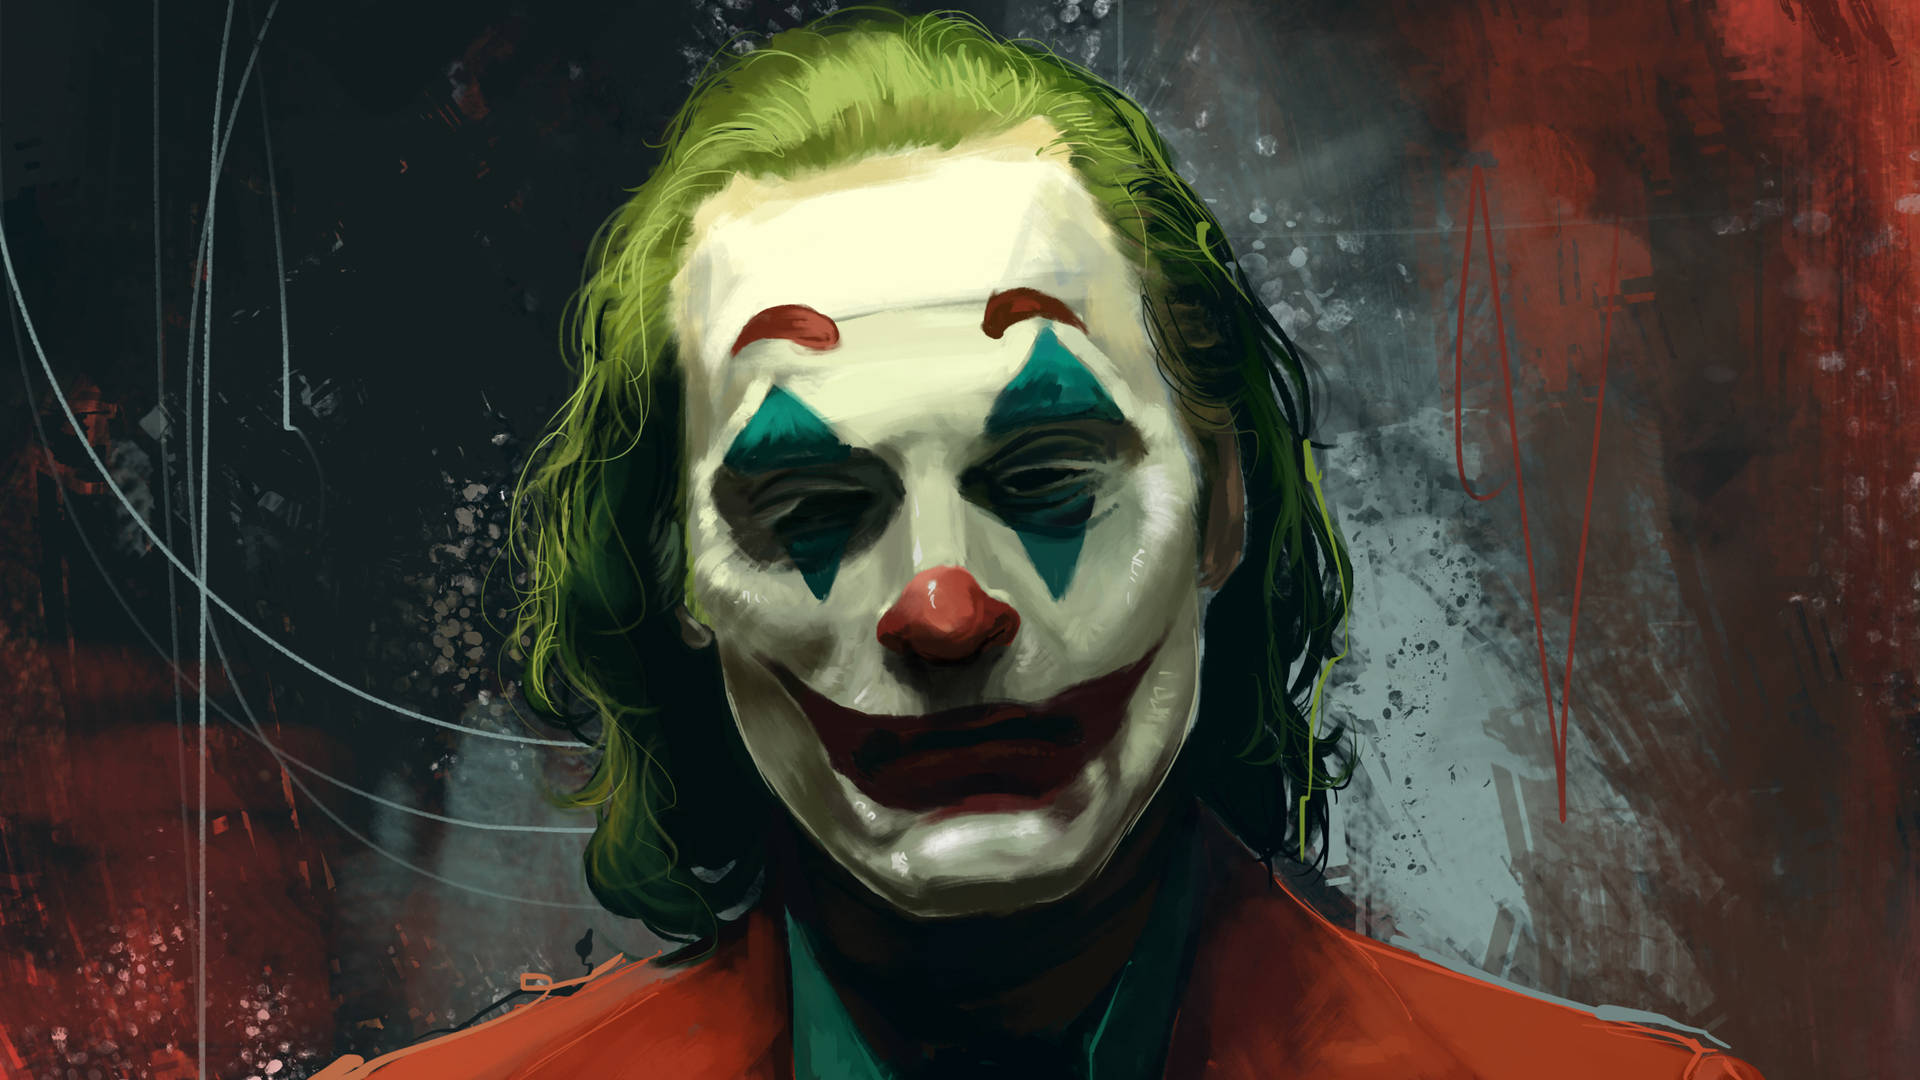 Joker 2020 Abstract Painting Wallpaper